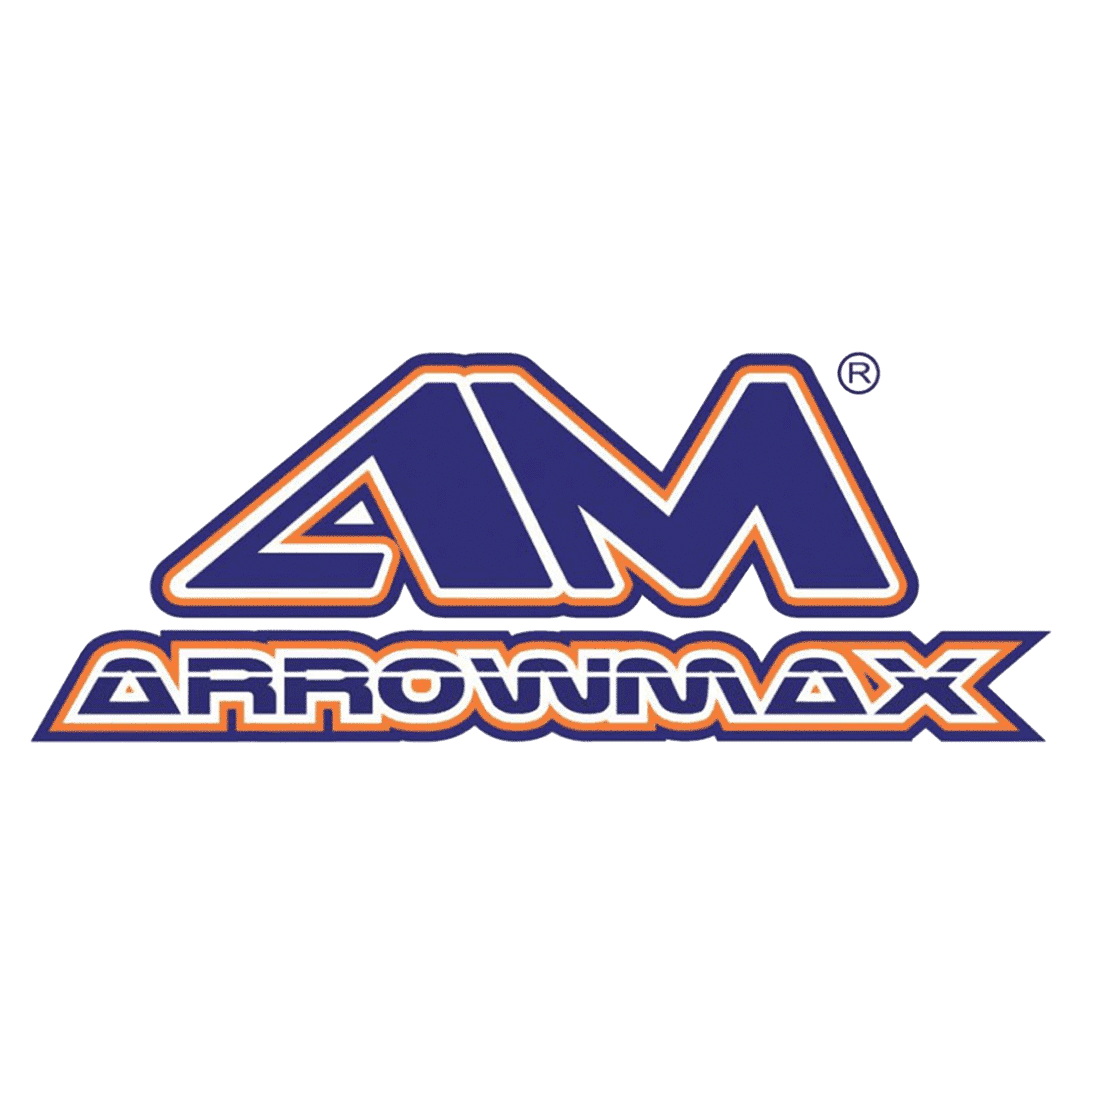 ArrowMax